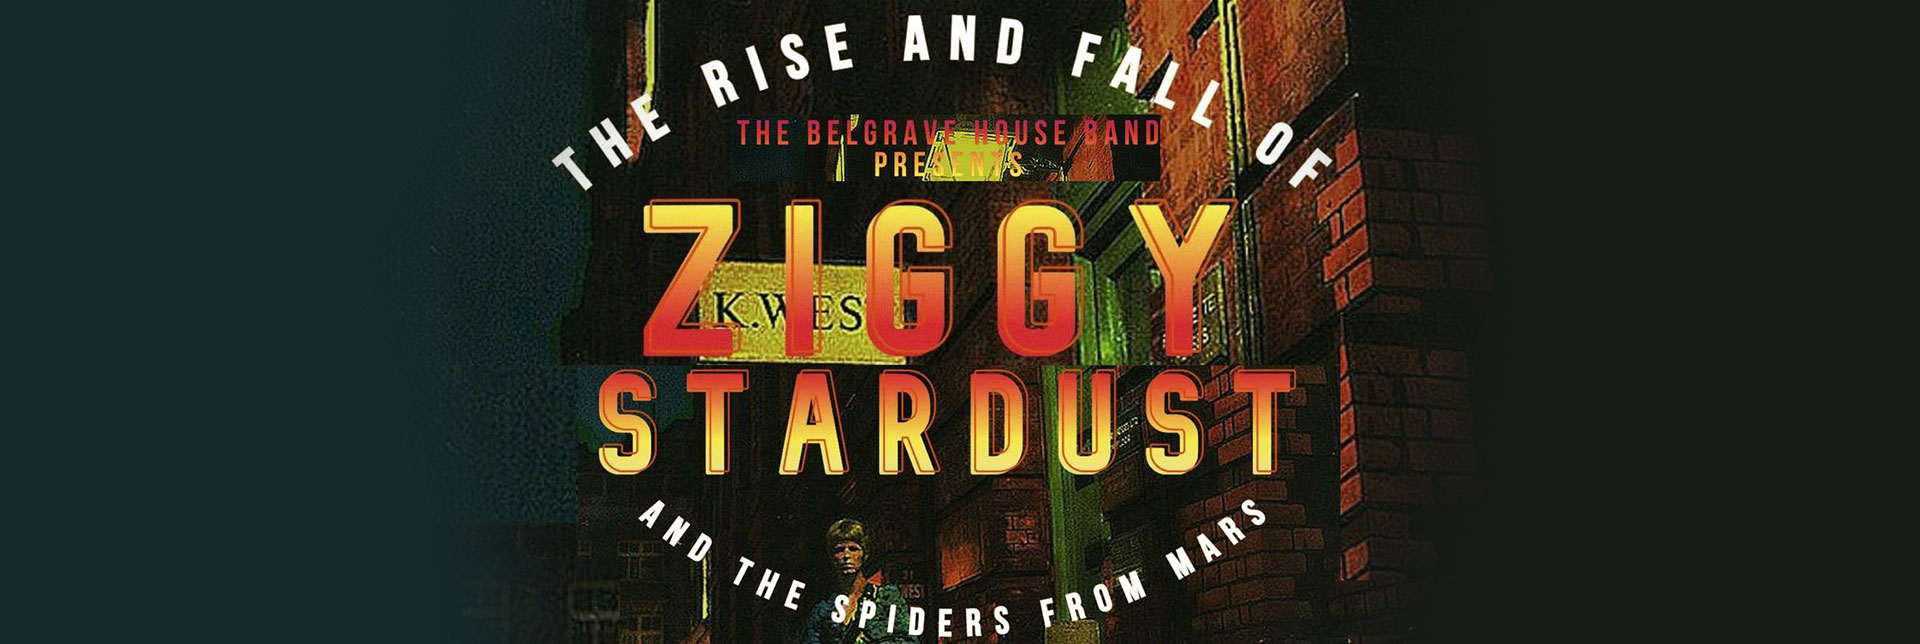 The Belgrave House Band Presents: Ziggy Stardust